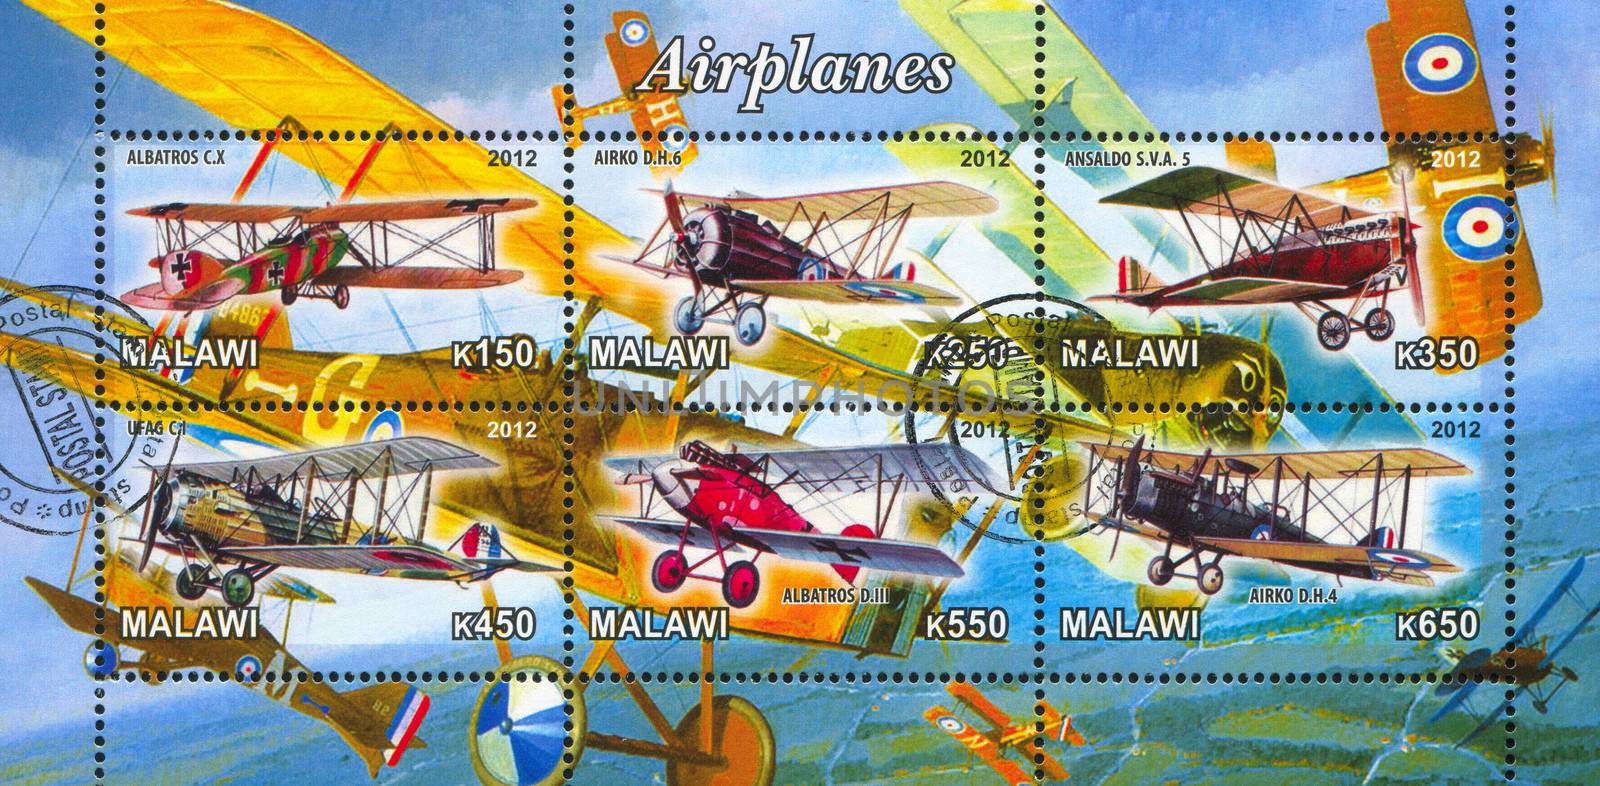 MALAWI - CIRCA 2012: stamp printed by Malawi, shows Airplane, circa 2012